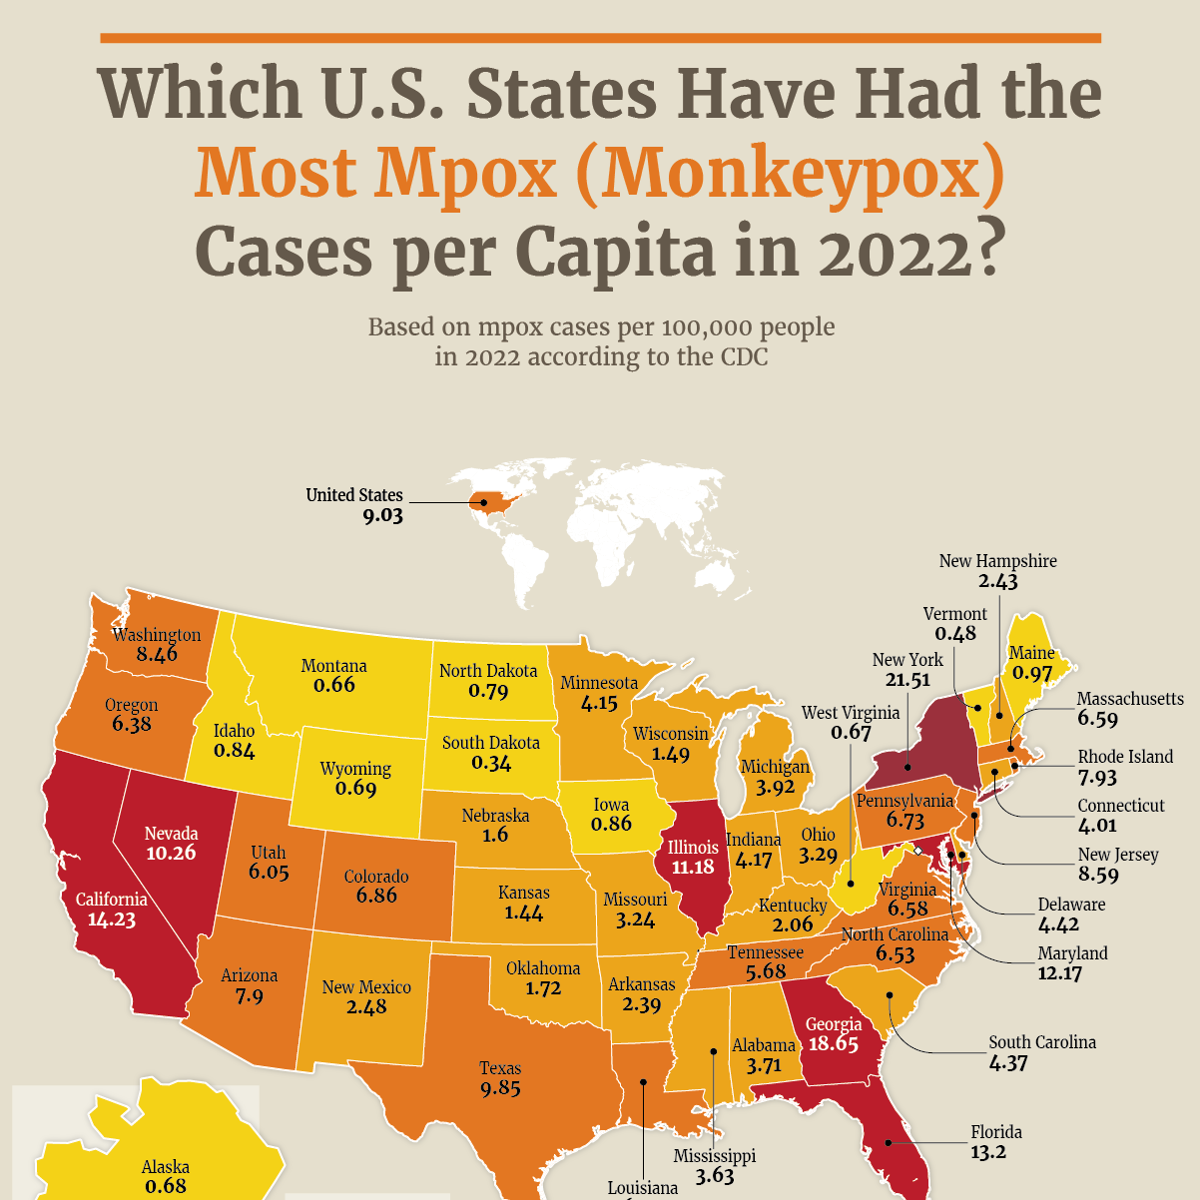 Which U.S. States Have Had the Most Mpox (Monkeypox) Cases per Capita